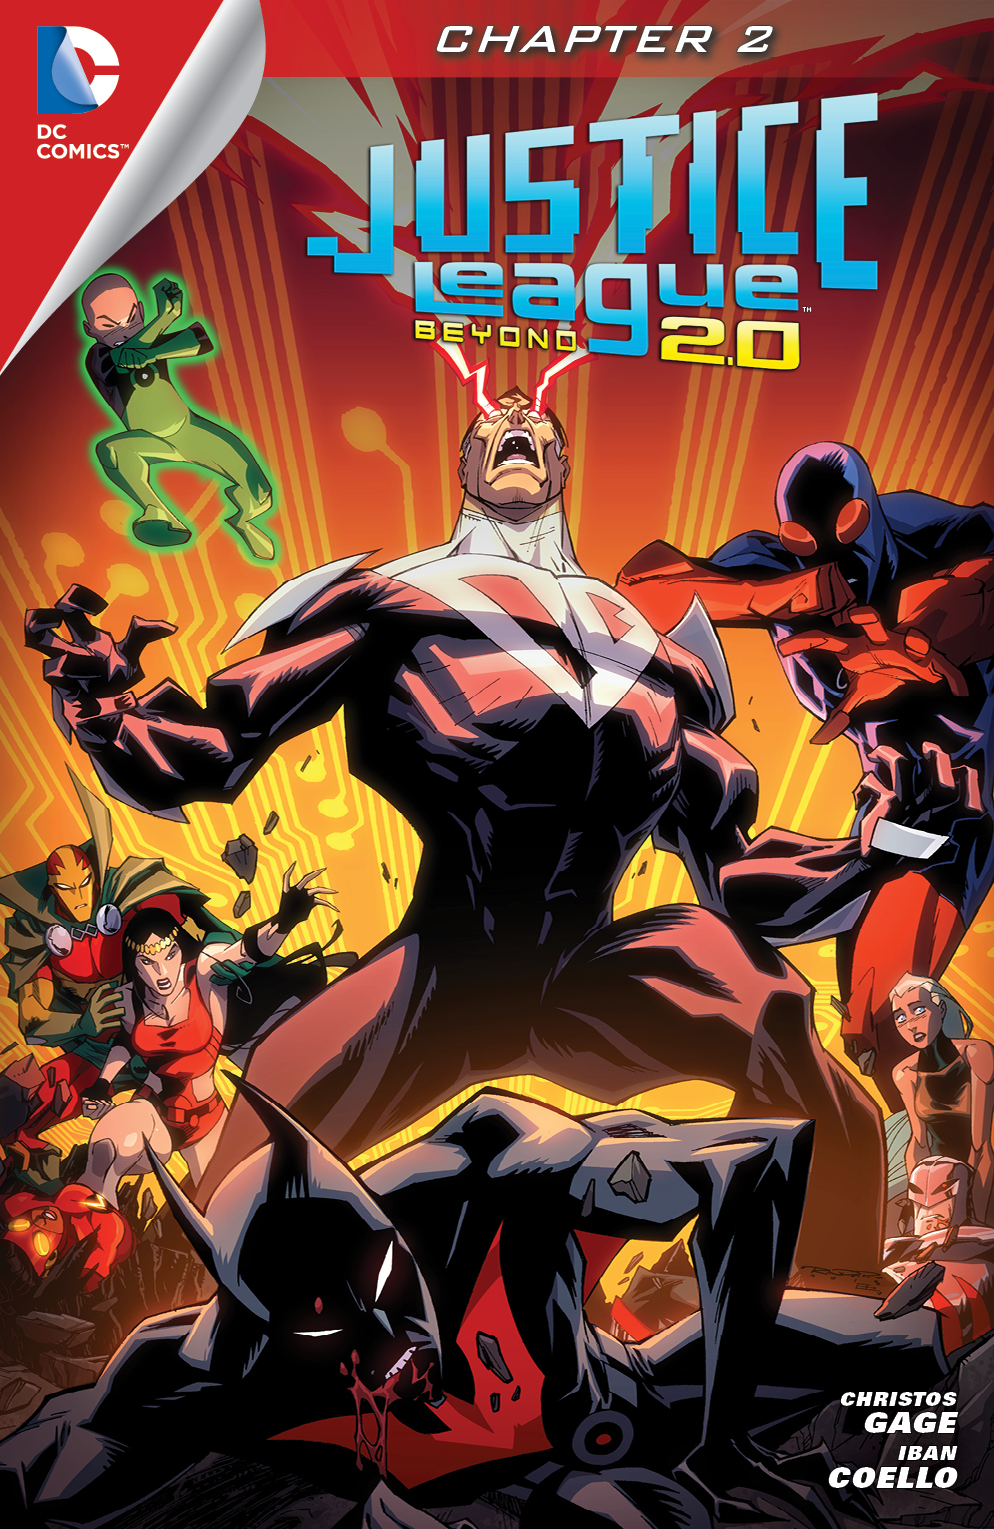 Justice League Beyond 2.0 #2 preview images